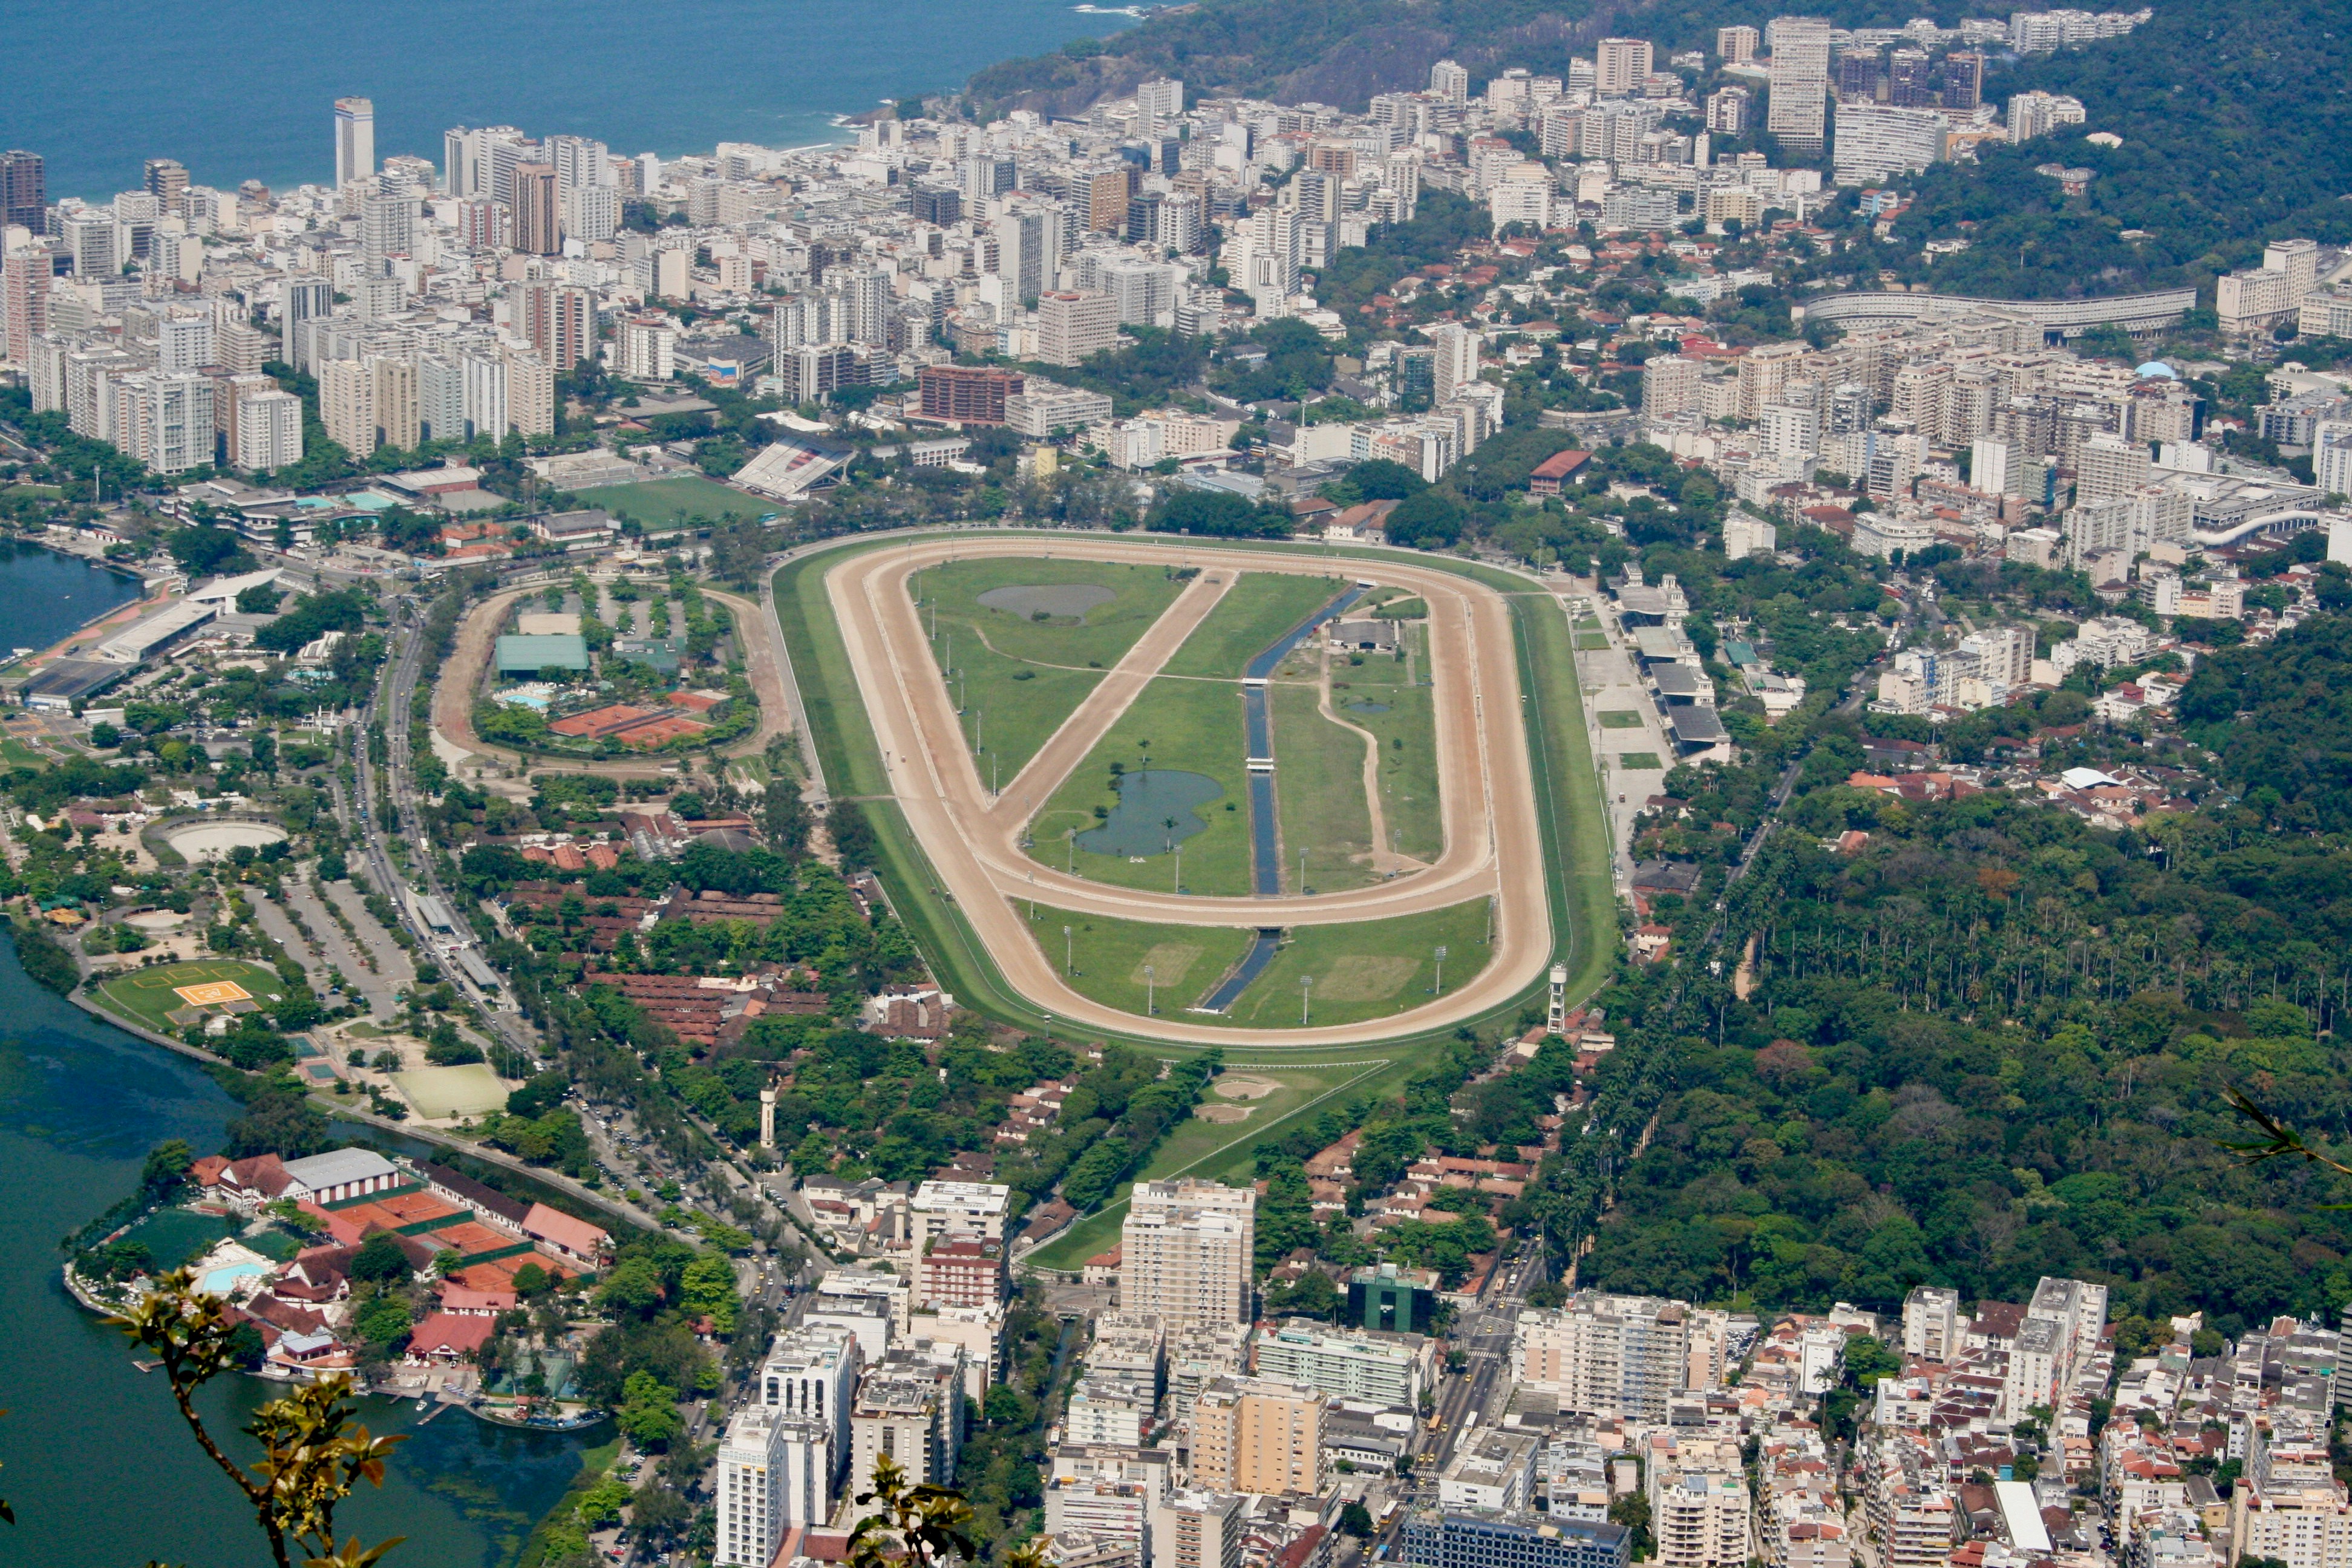 Gavea Horse track in Rio de Janeiro, Brazil